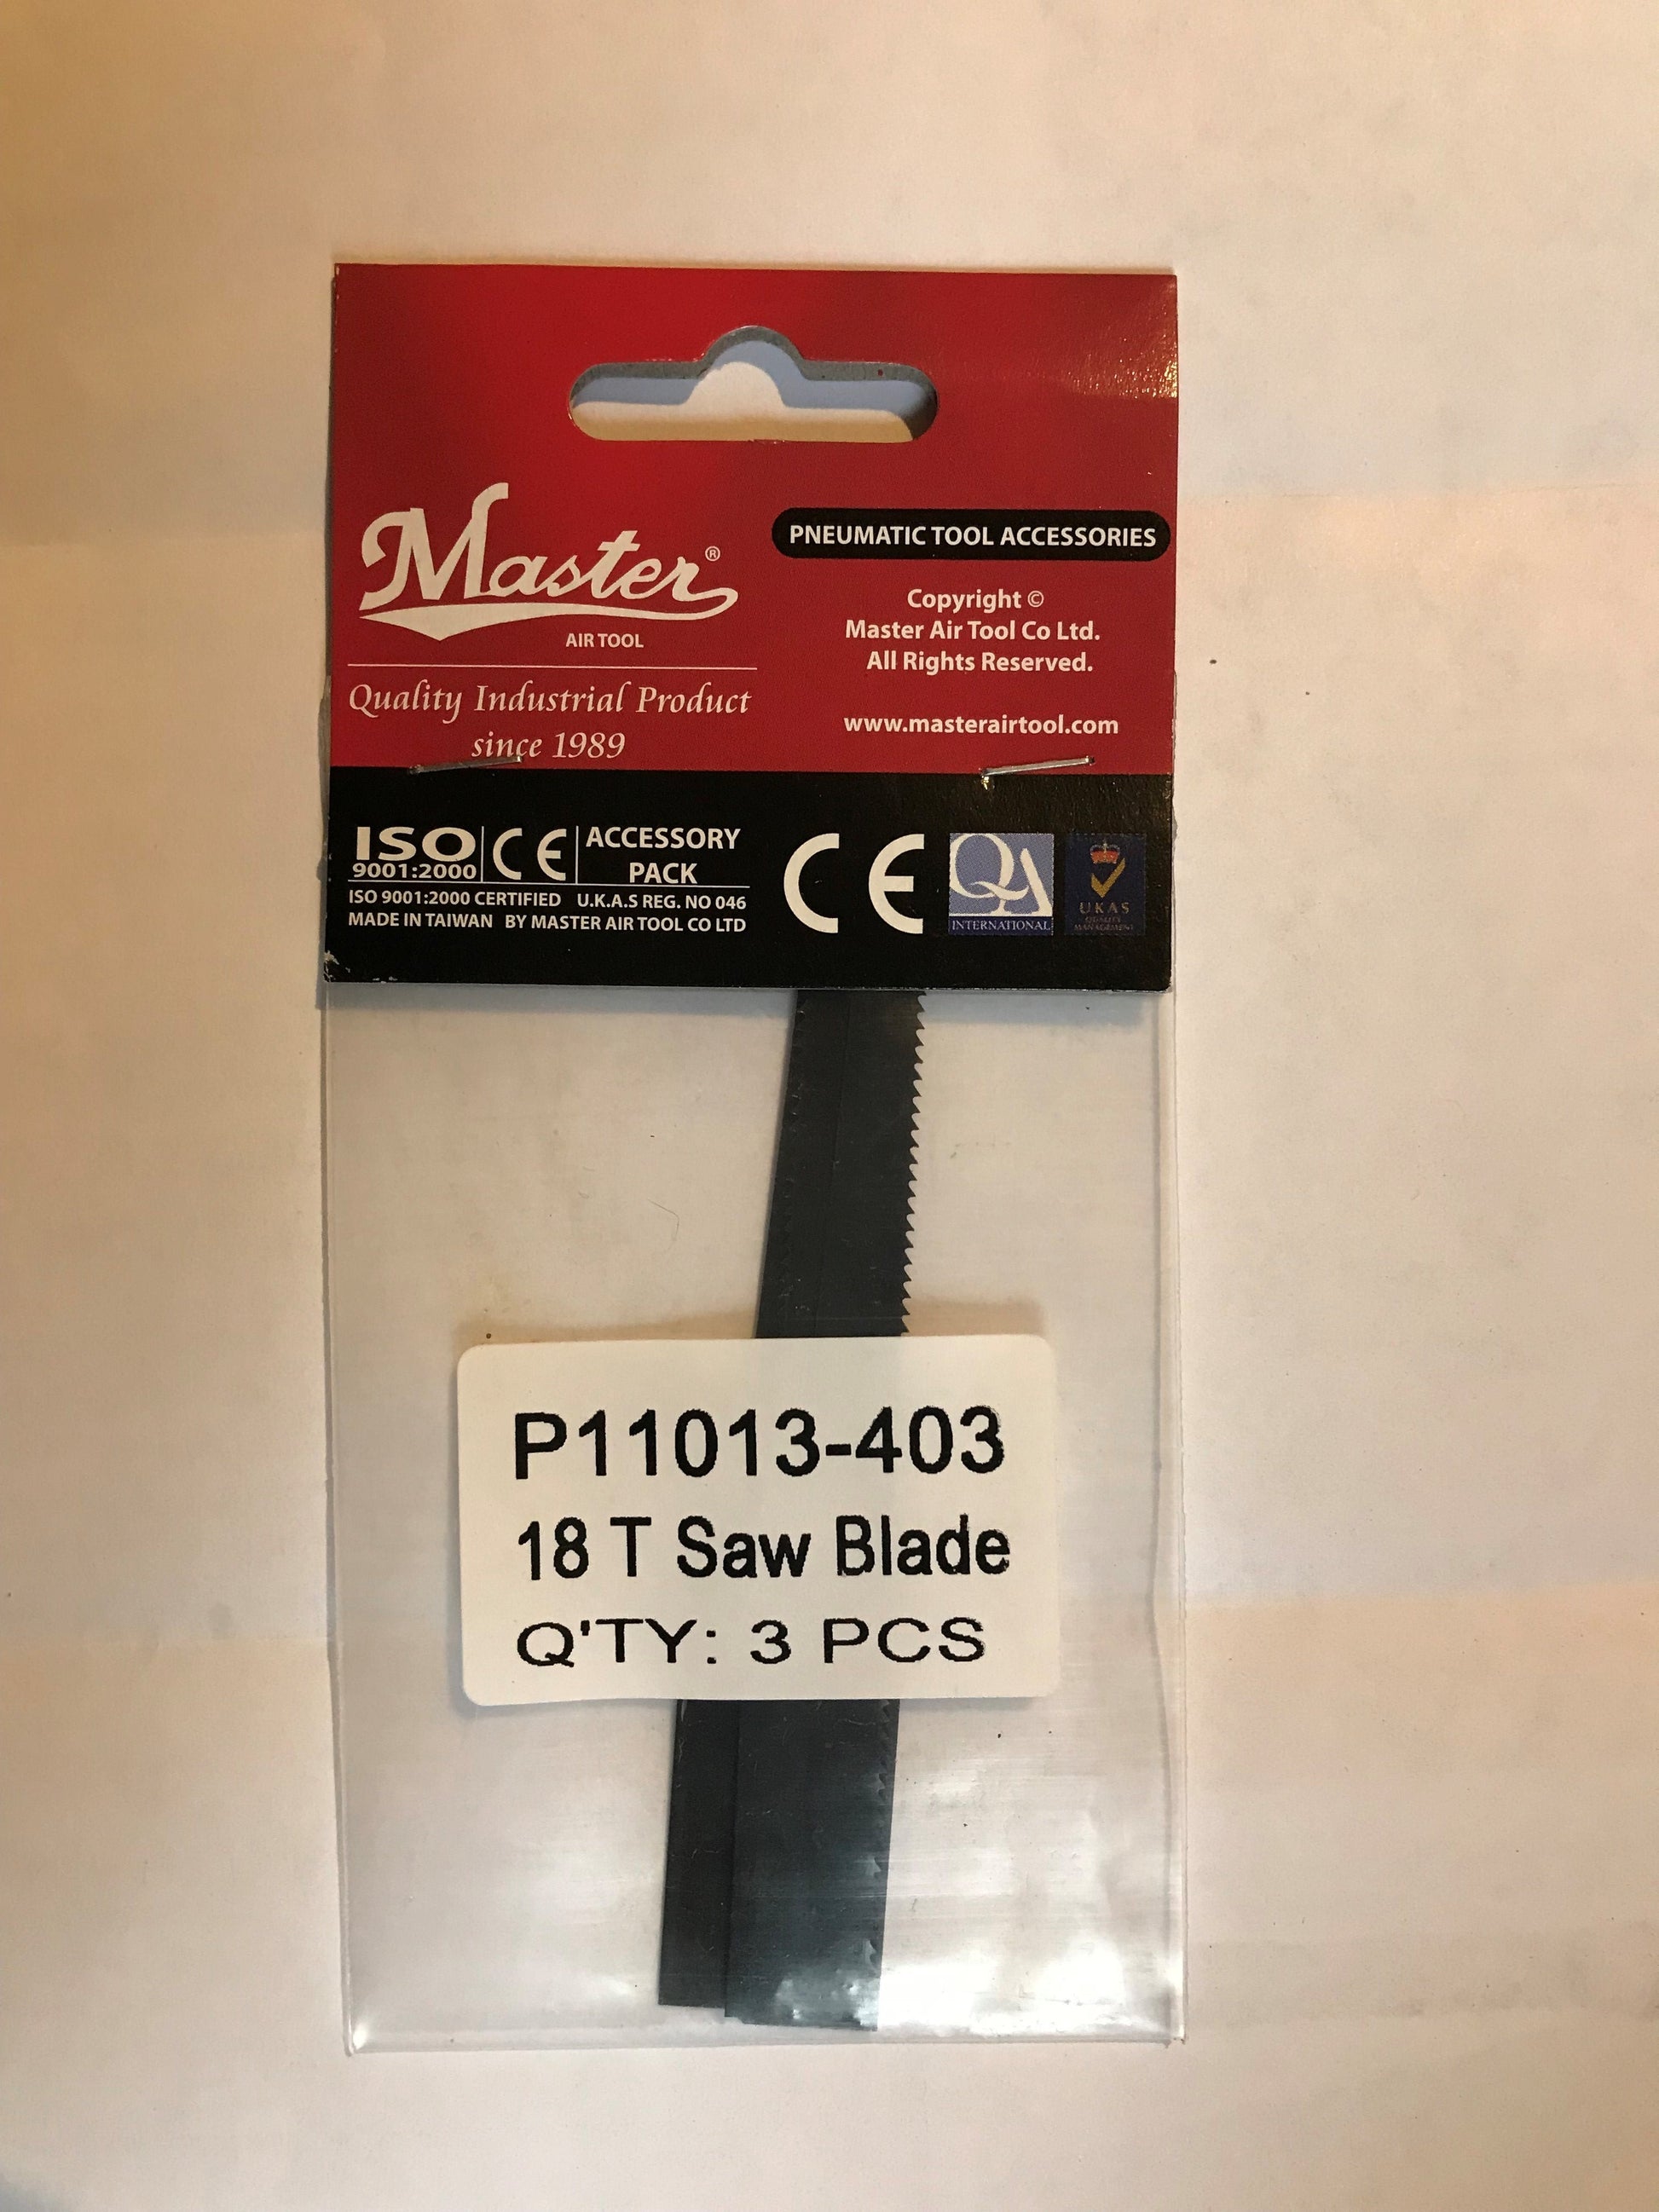 Pneumatic Reciprocating Saw Blade Set - MSA-P11013-403 - USD $12.5 - Master Palm Pneumatic